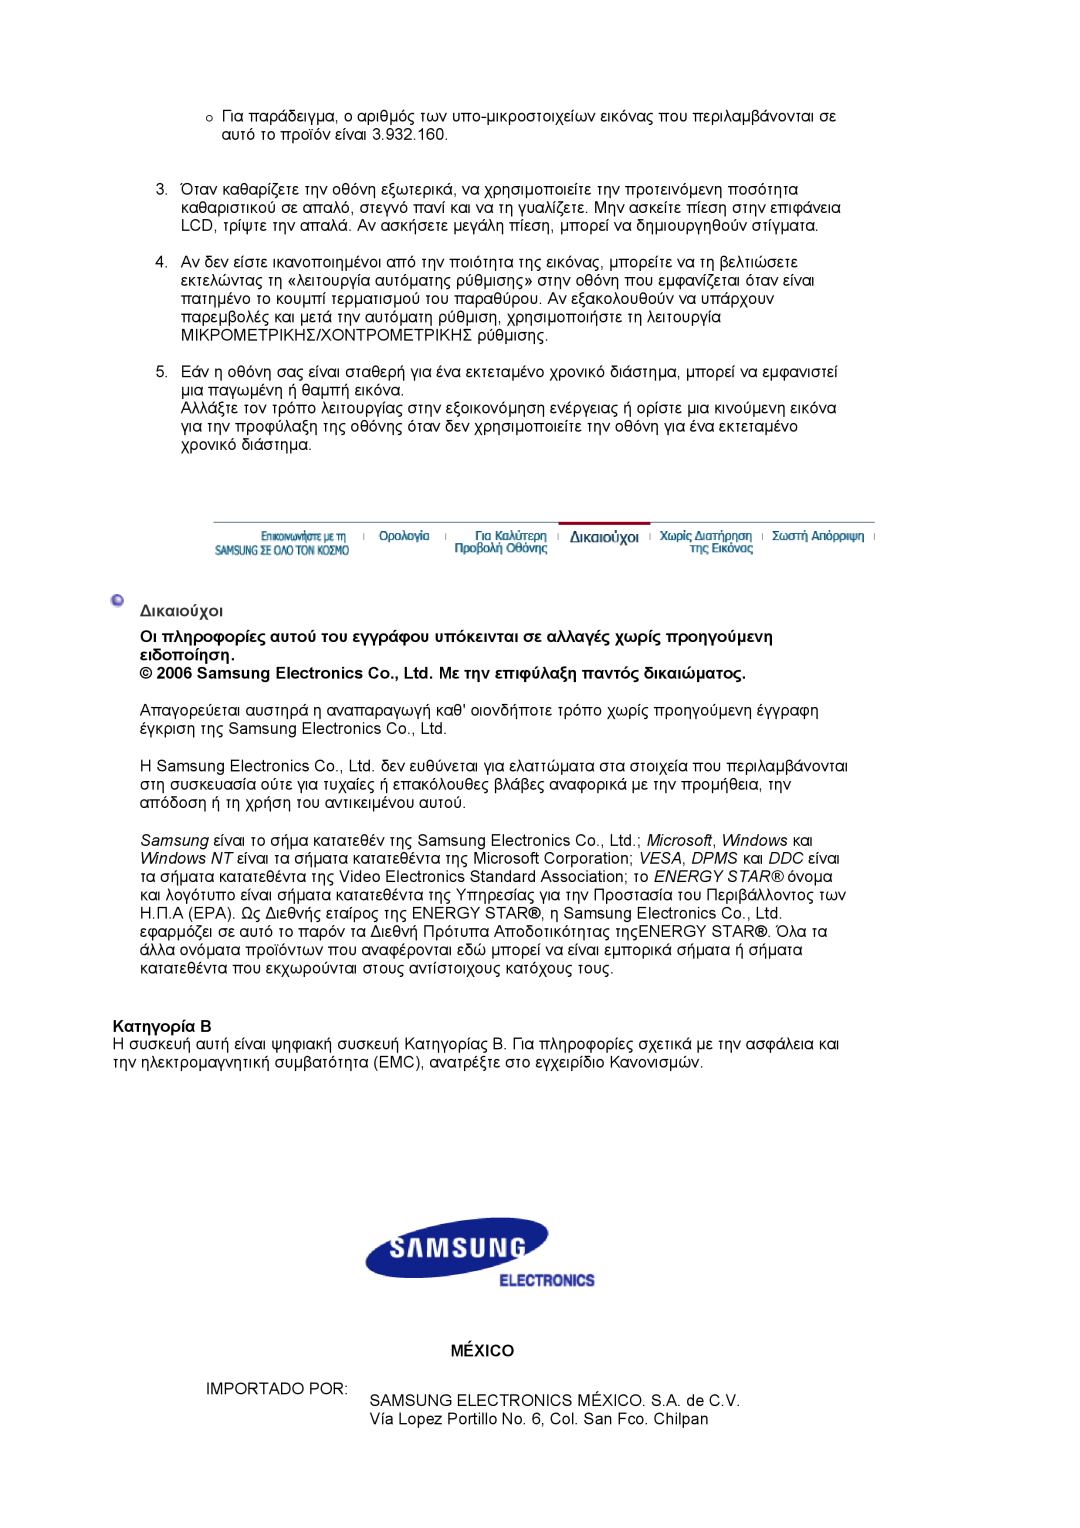 Samsung LS17MJVKS/EDC manual ∆ικαιούχοι, Κατηγορία B, México 